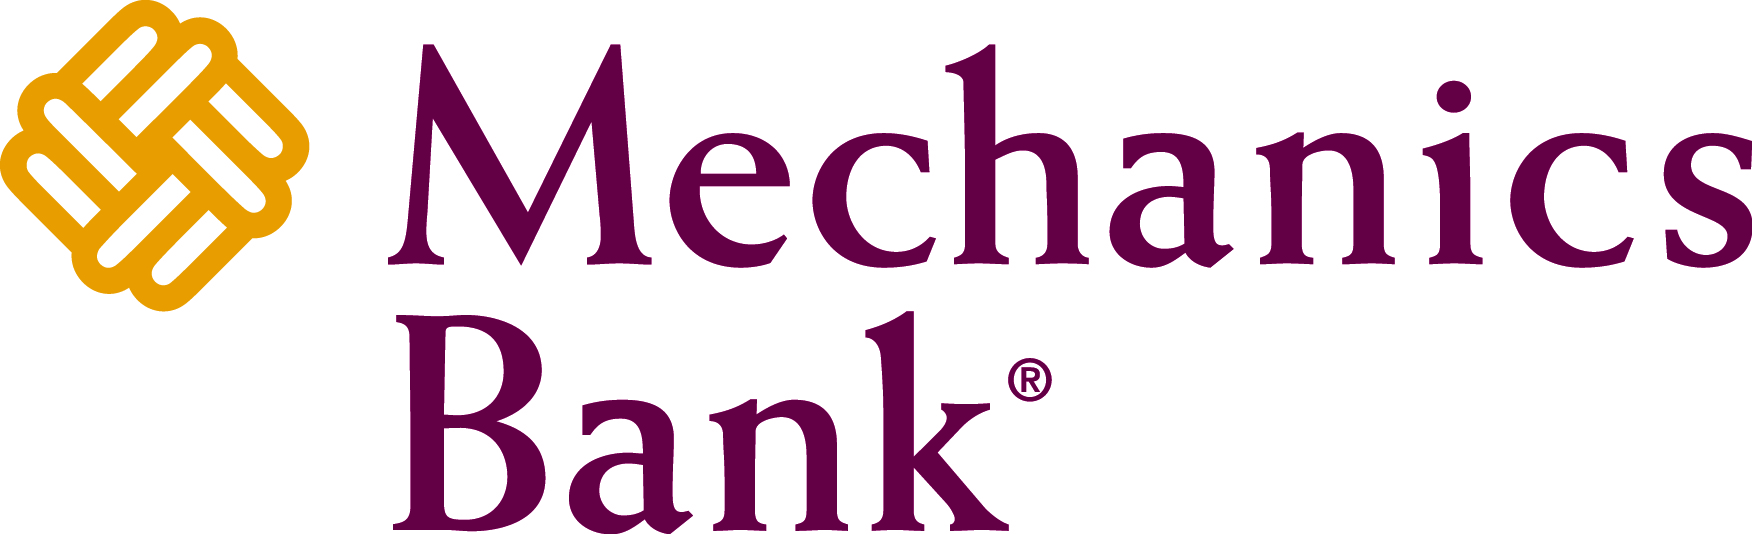 Mechanics Bank Sponsor